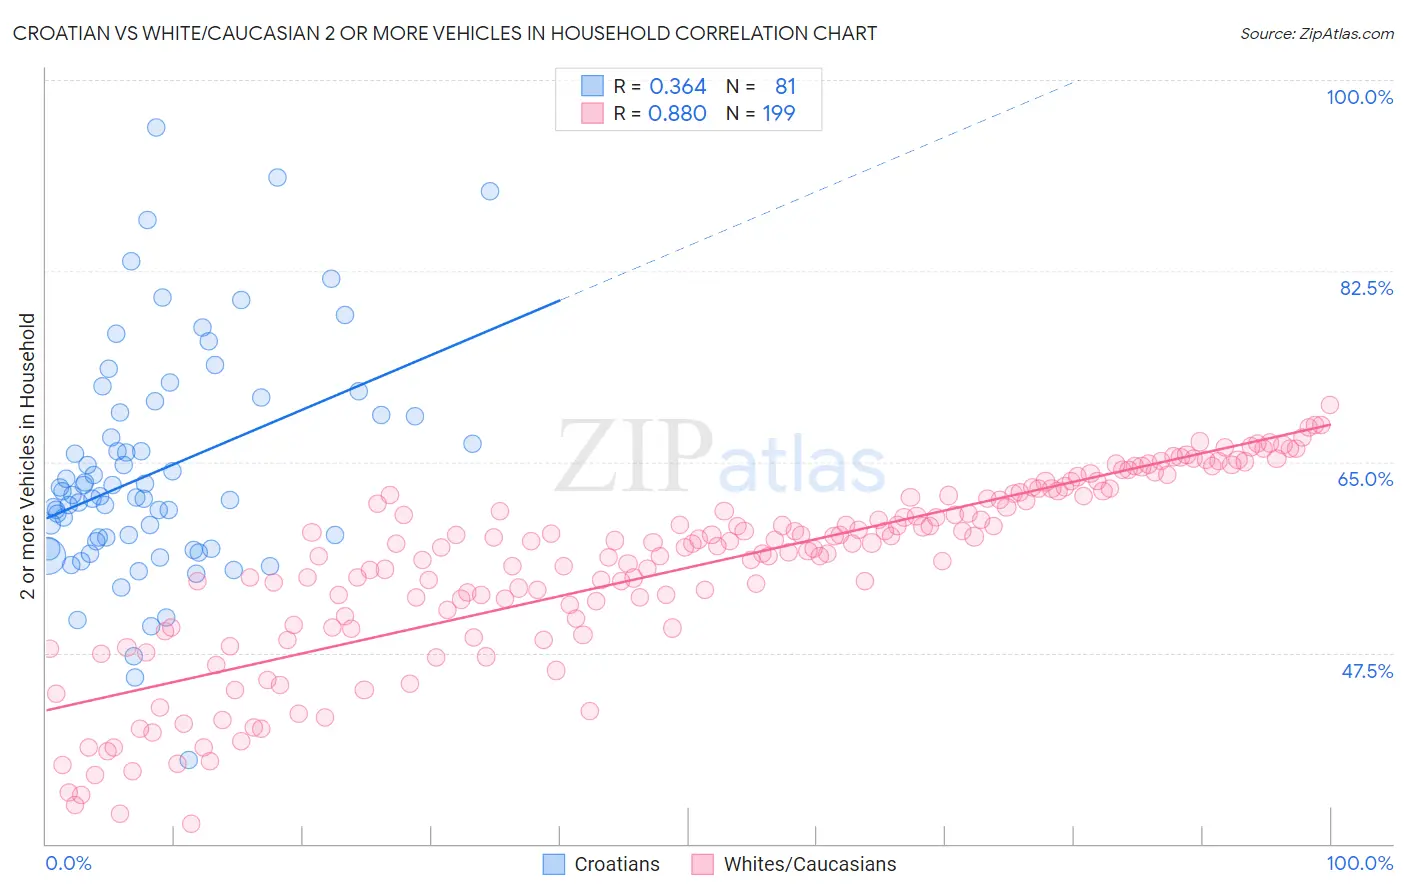 Croatian vs White/Caucasian 2 or more Vehicles in Household